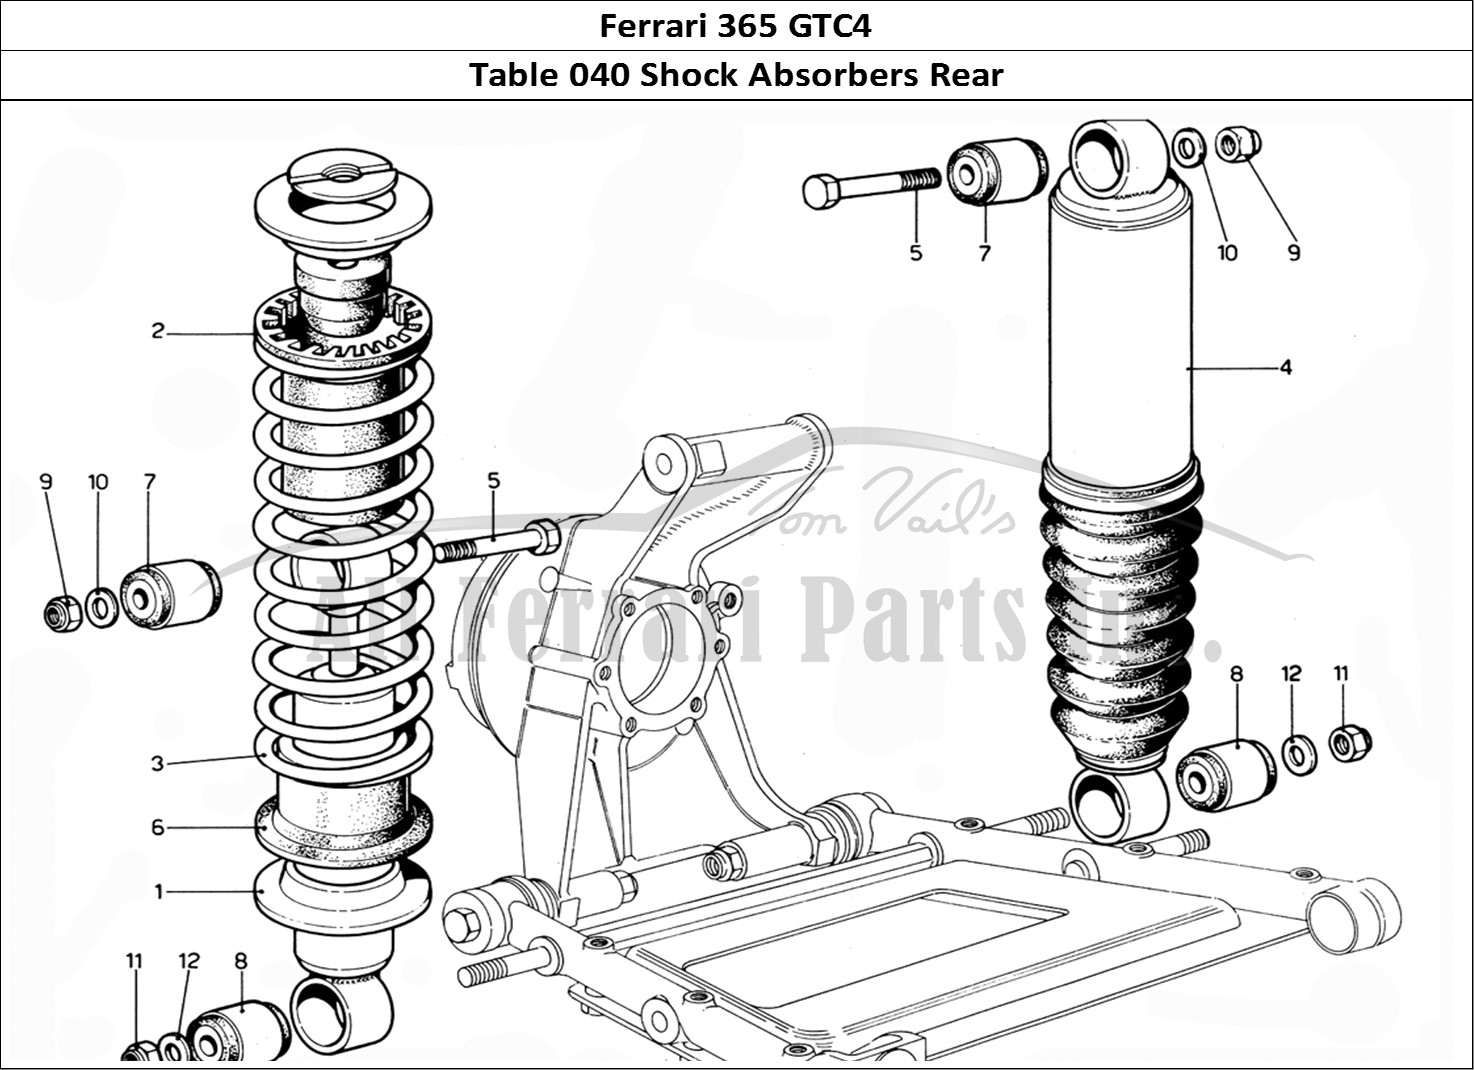 Ferrari Parts Ferrari 365 GTC4 (Mechanical) Page 040 Rear shock absorbers